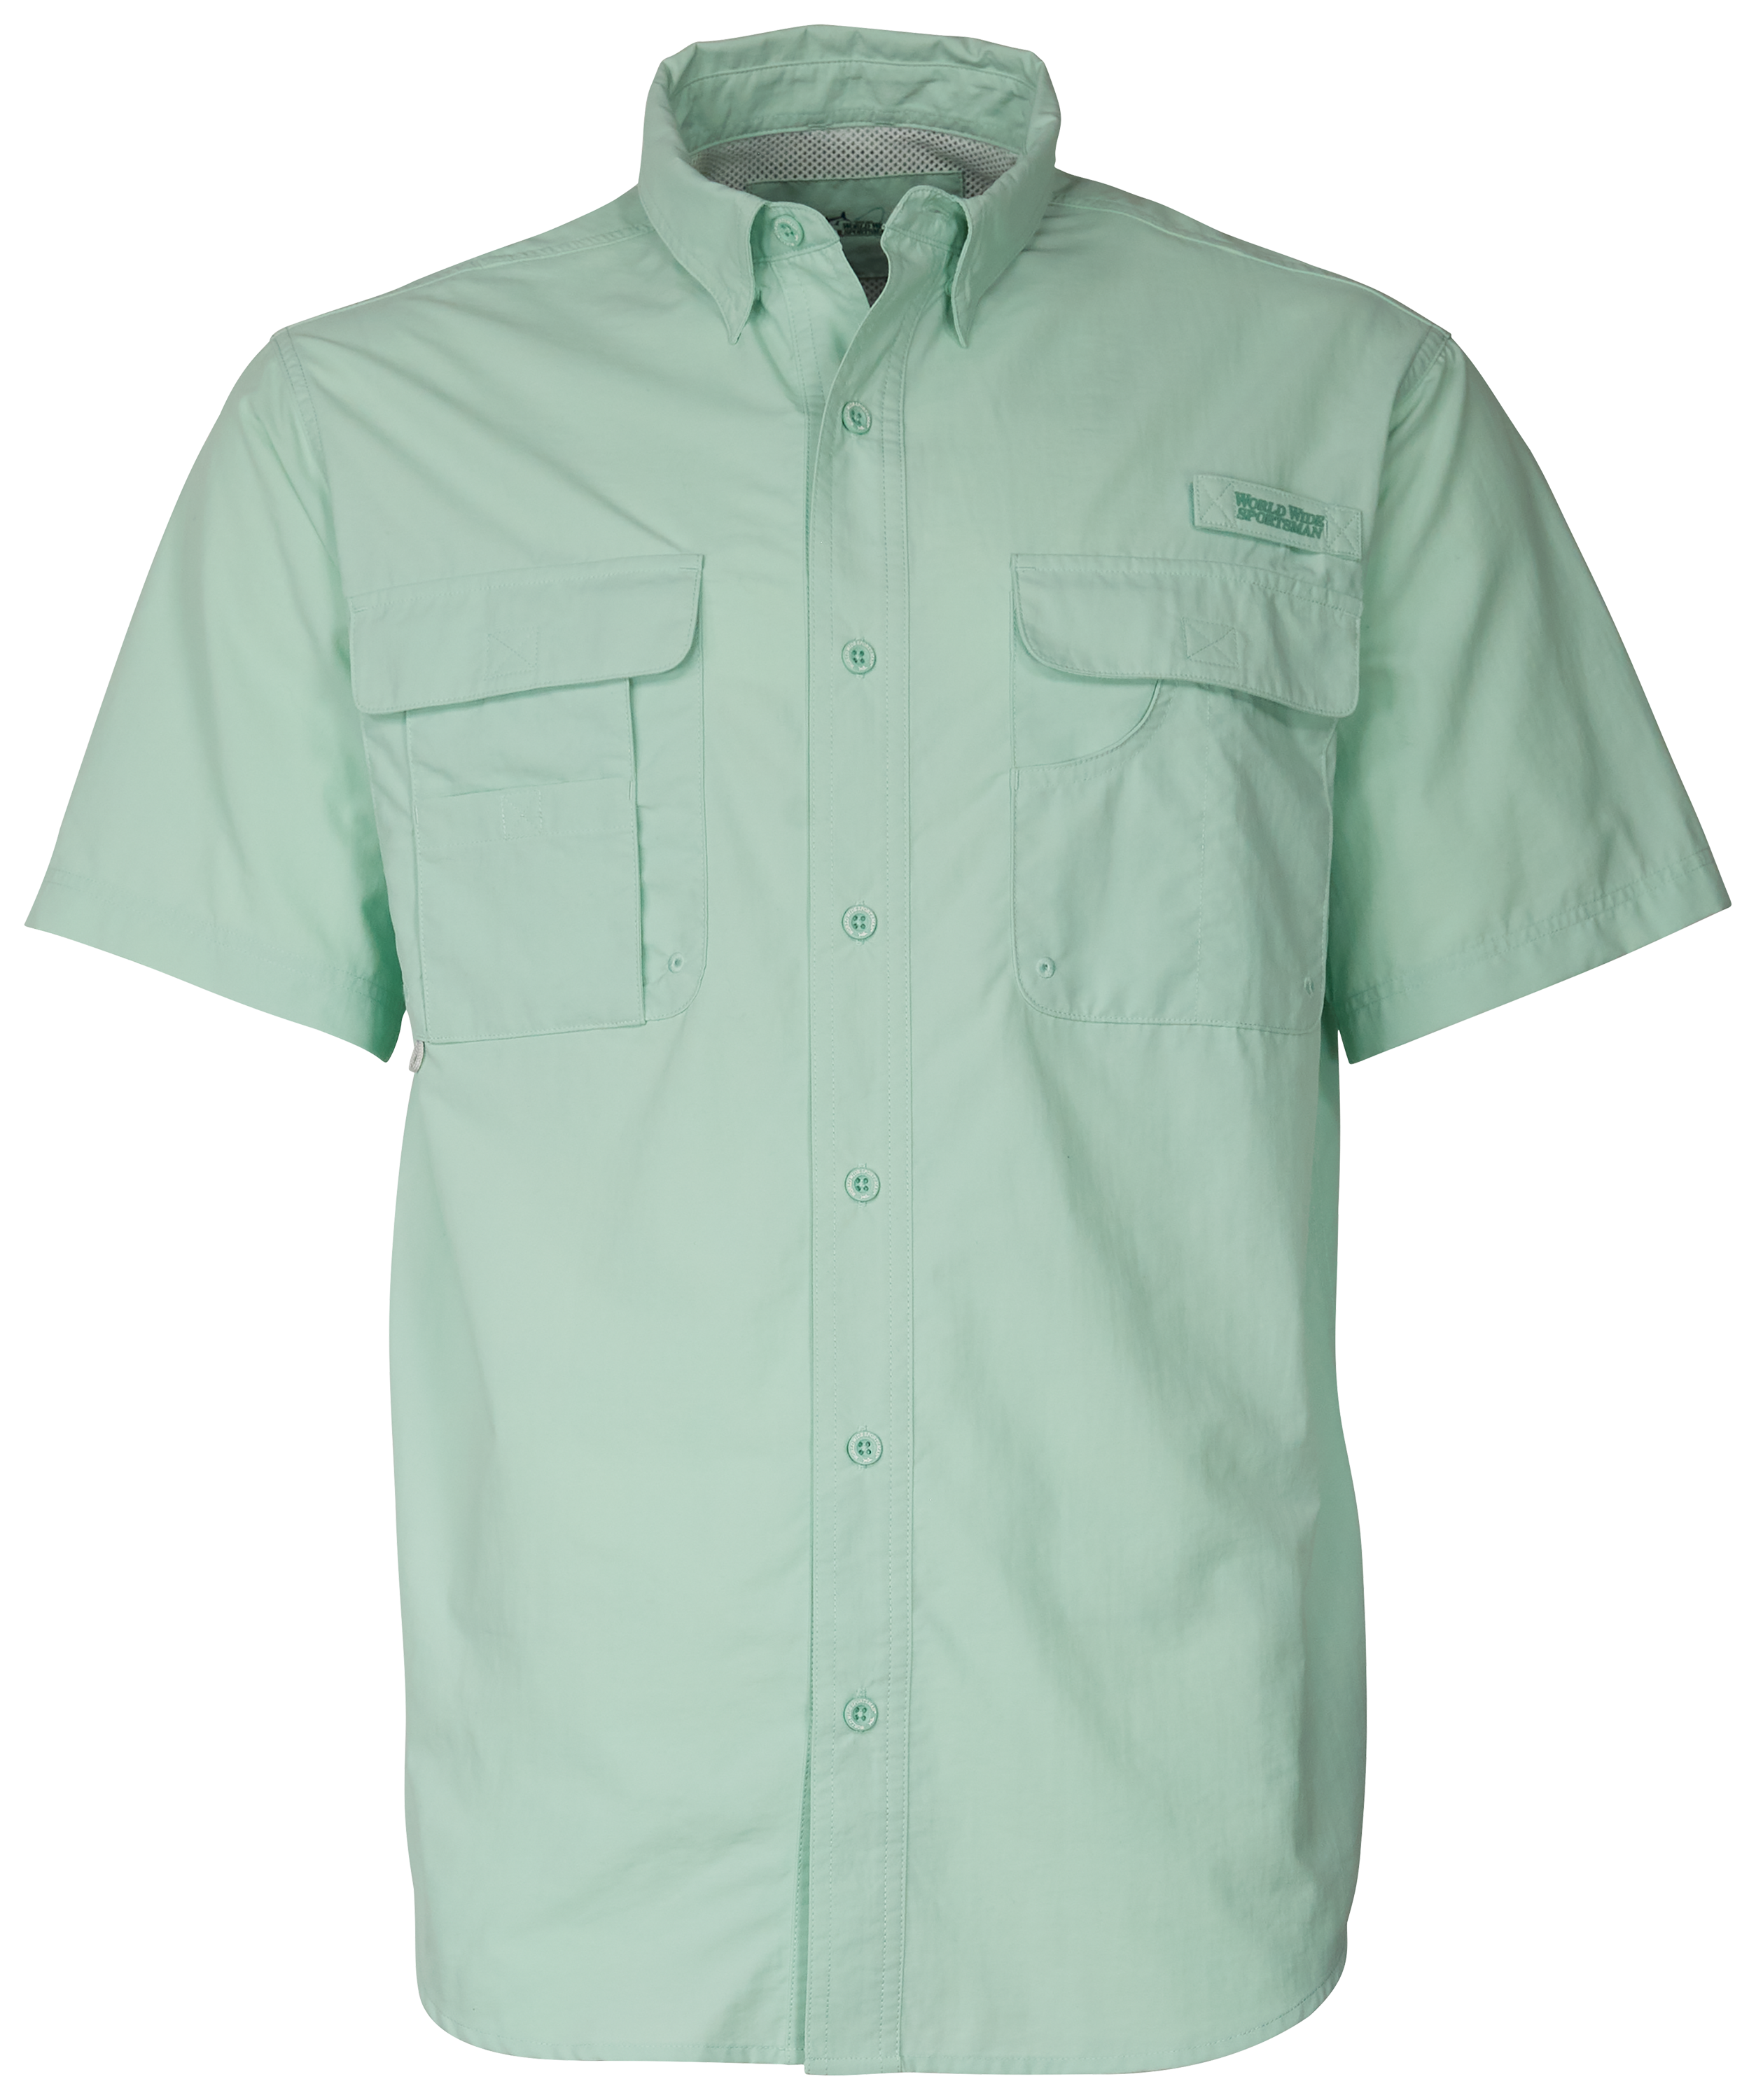 World Wide Sportsman Recycled-Nylon Angler 2.0 Short-Sleeve Button-Down Shirt for Men - Lichen - 2XL